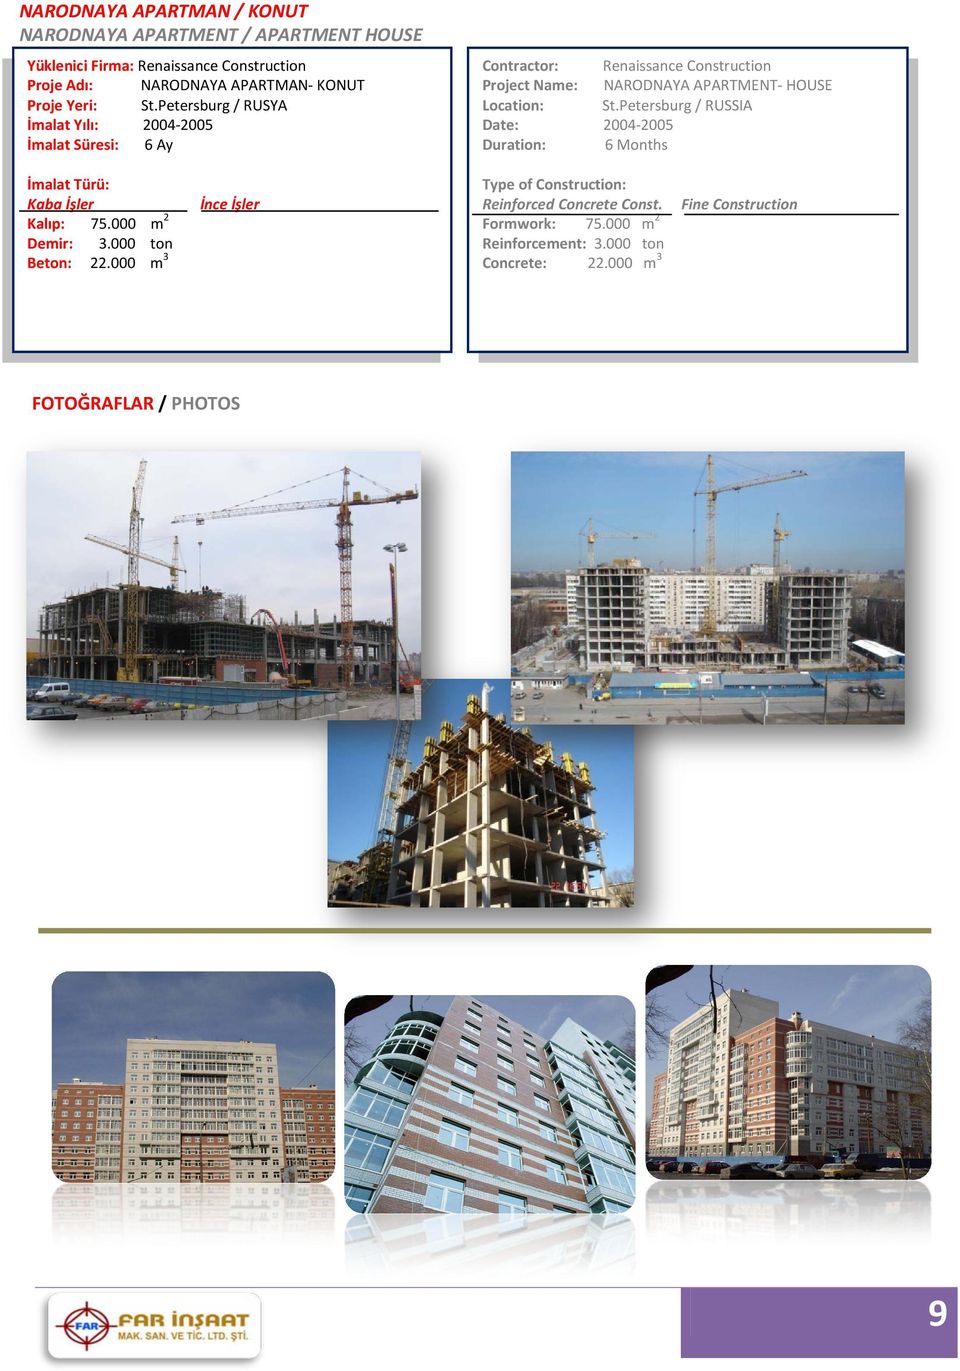 Petersburg / RUSYA İmalat Yılı: 2004-2005 İmalat Süresi: 6 Ay Contractor: Renaissance Construction Project Name: NARODNAYA APARTMENT-